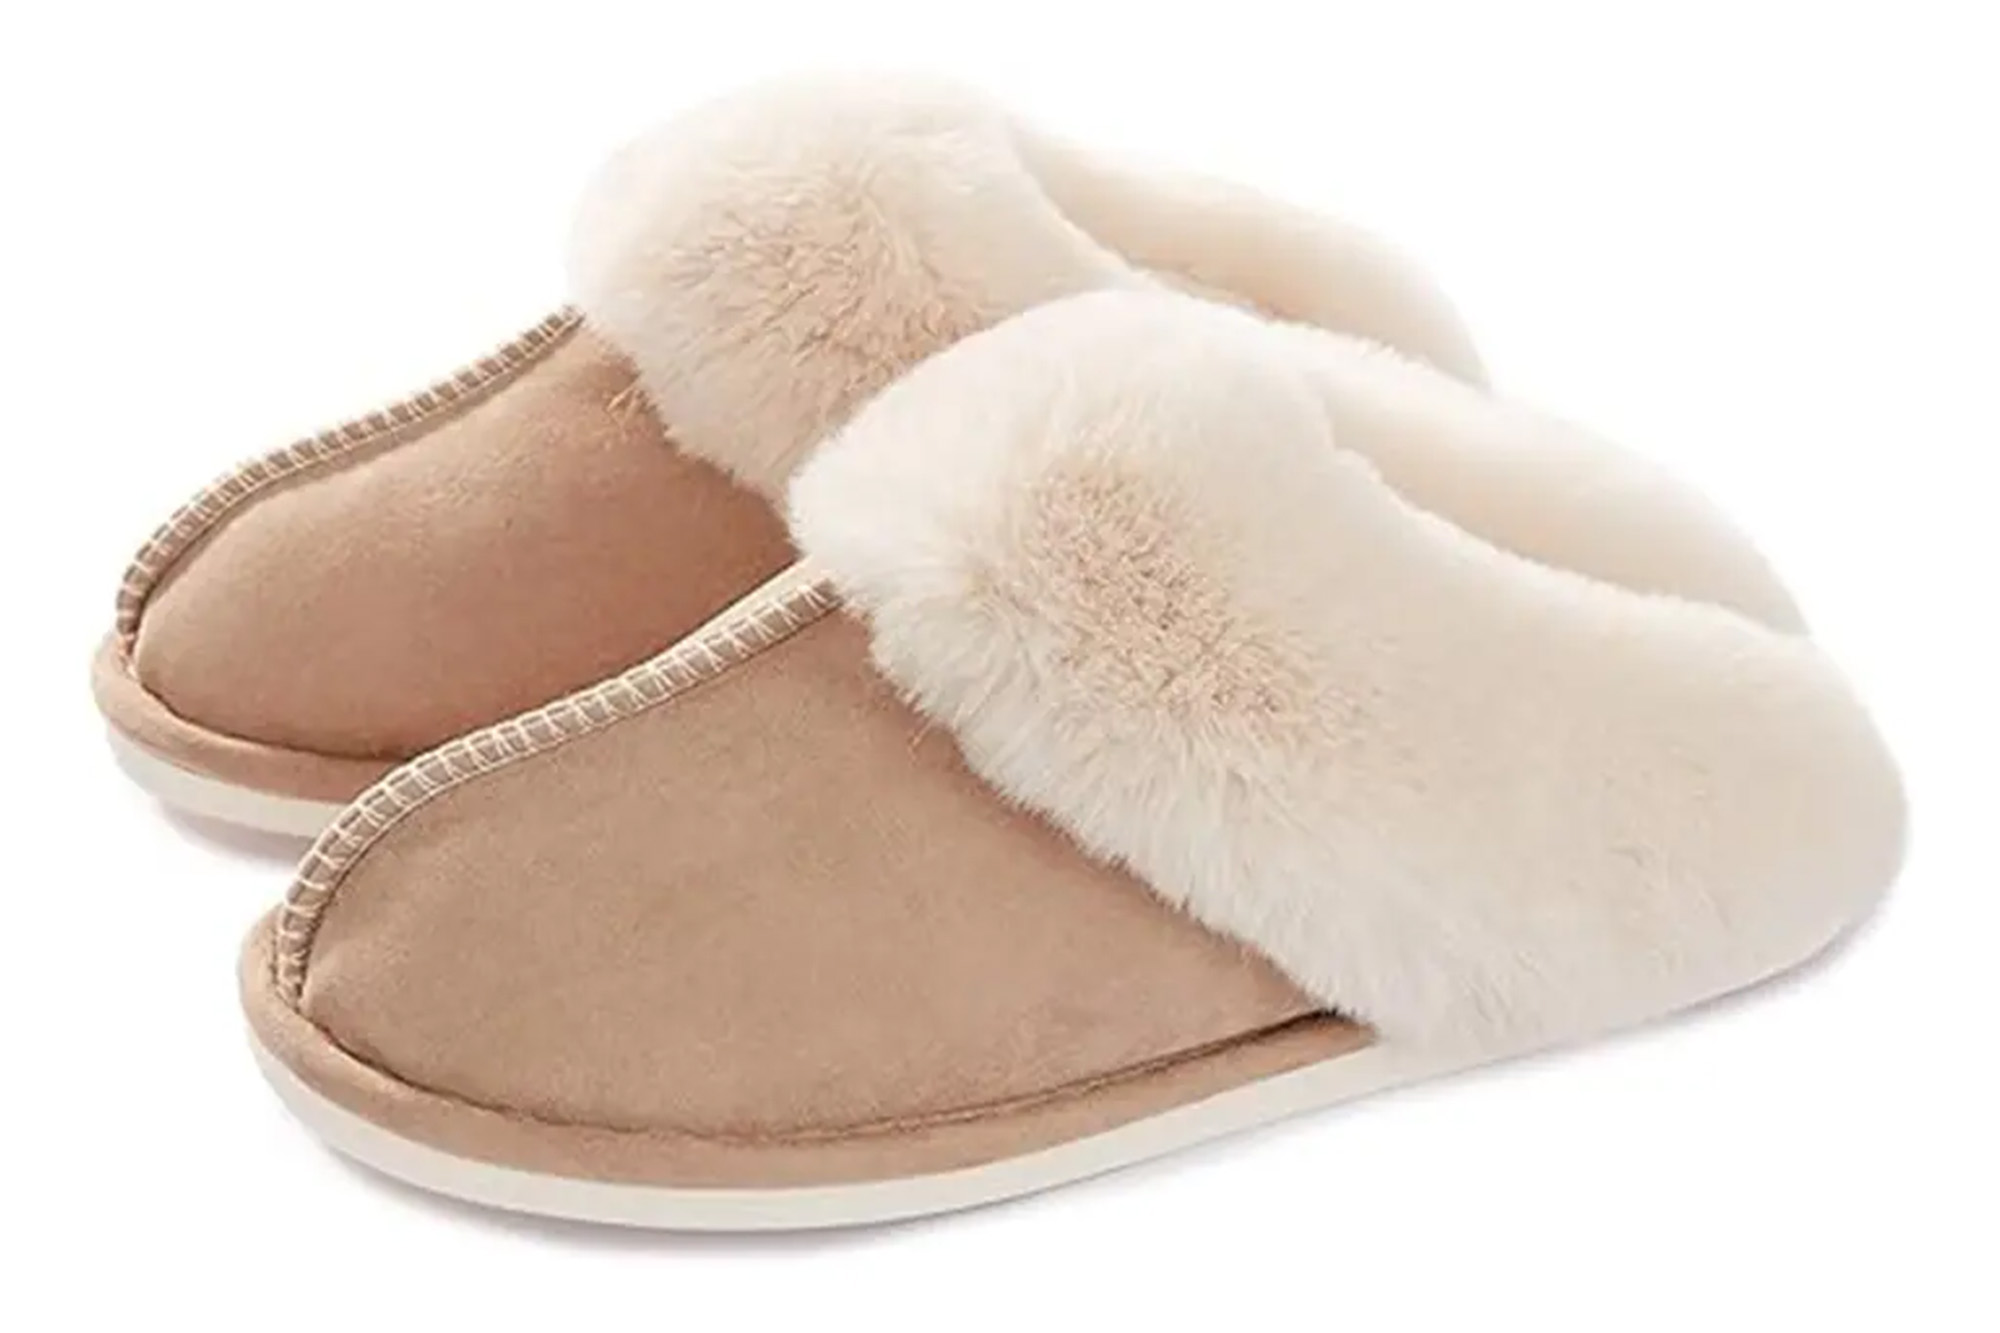 Donpapa memory foam slippers in tan and white shearling